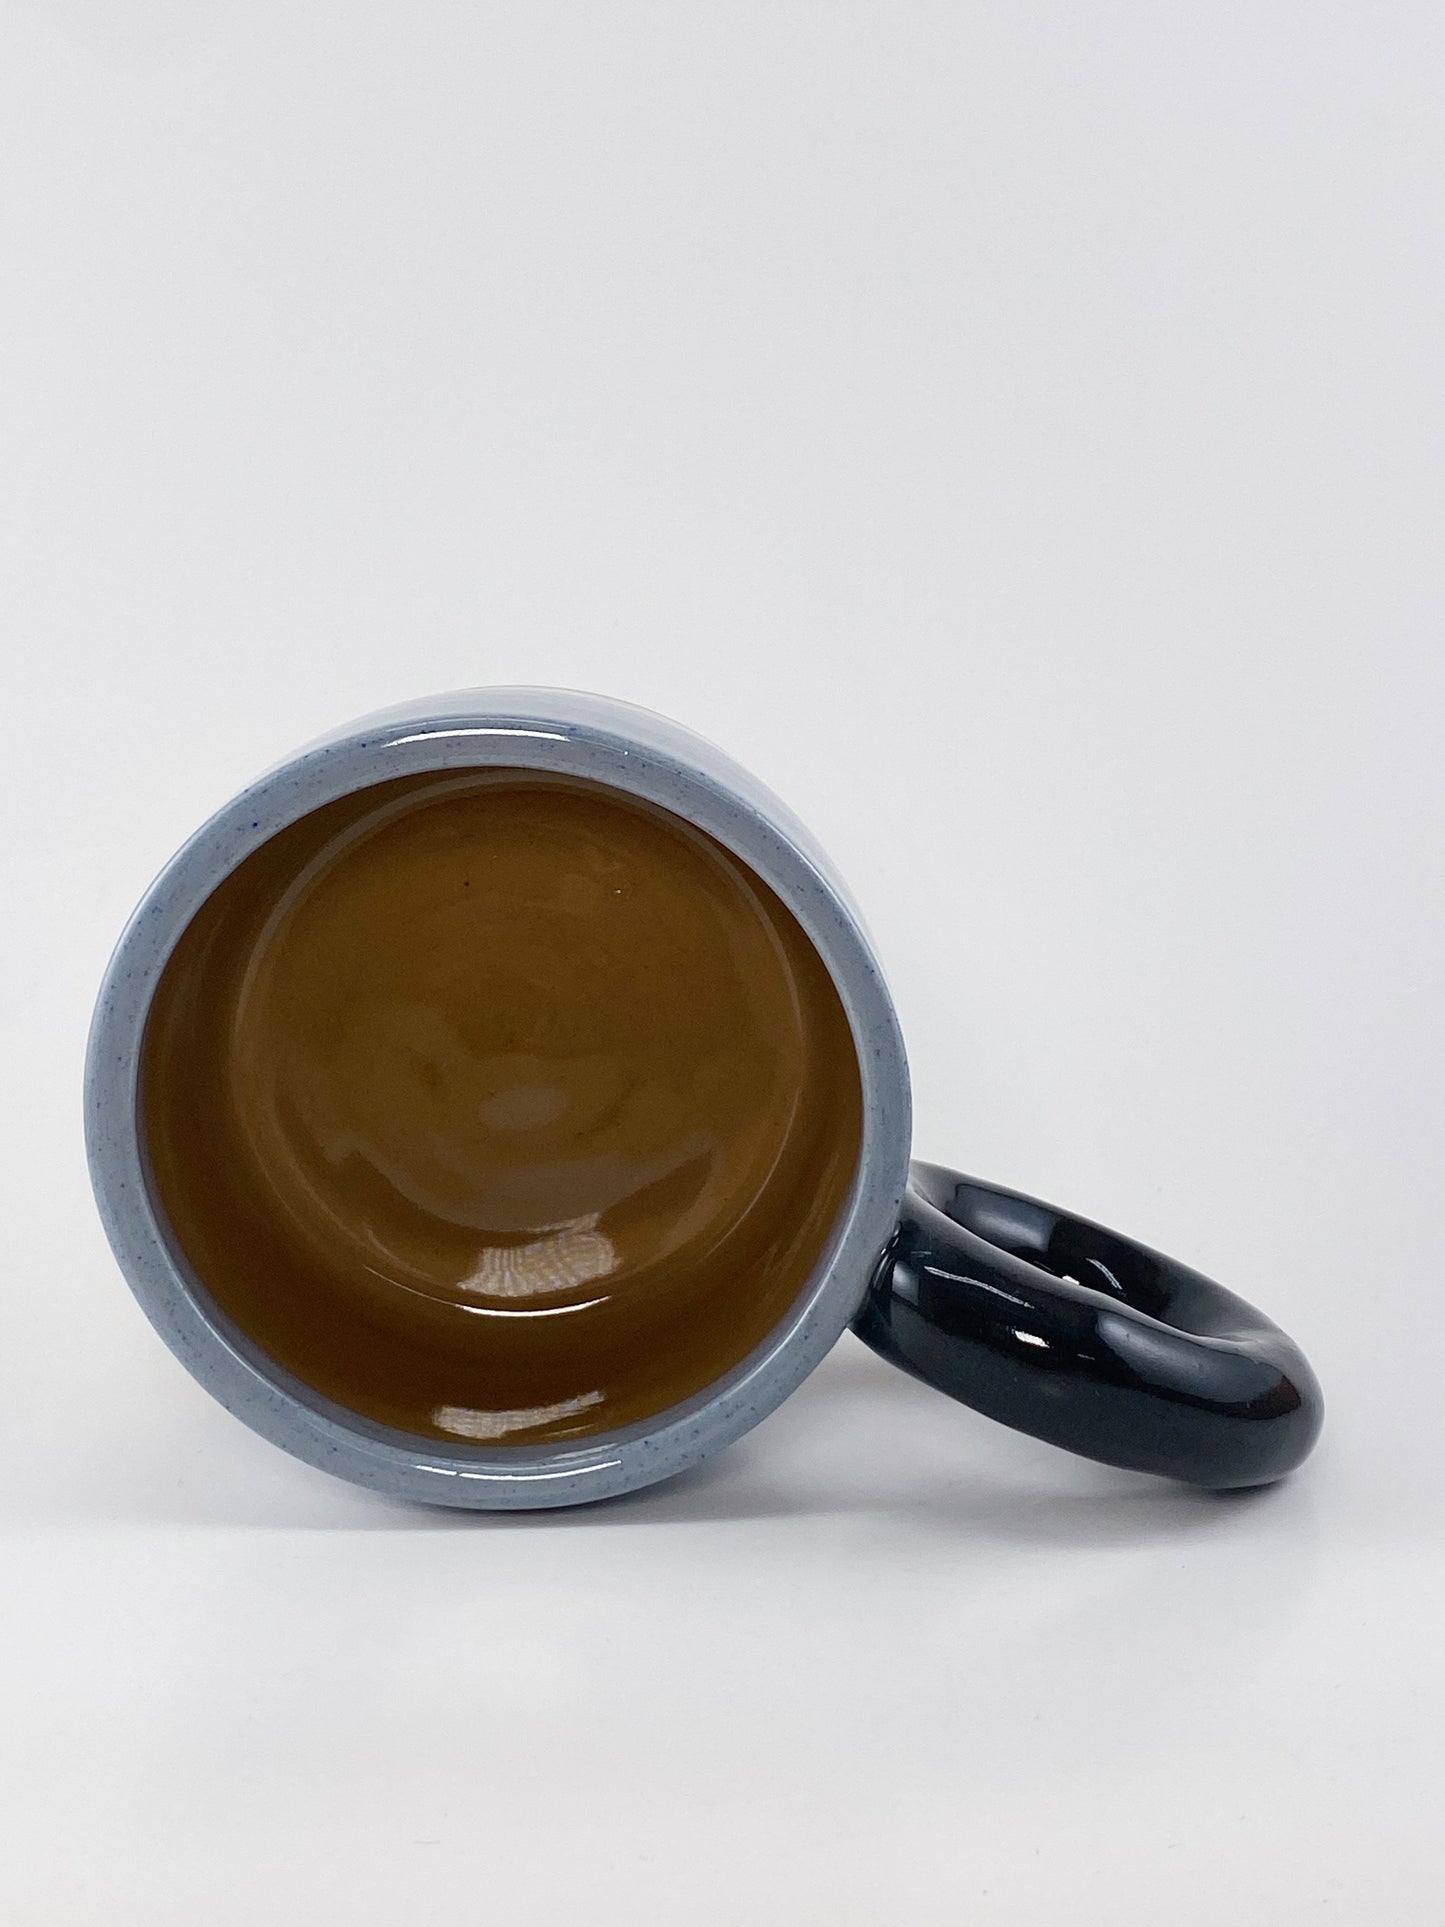 Tricolor Mug - Black, Blue, Brown